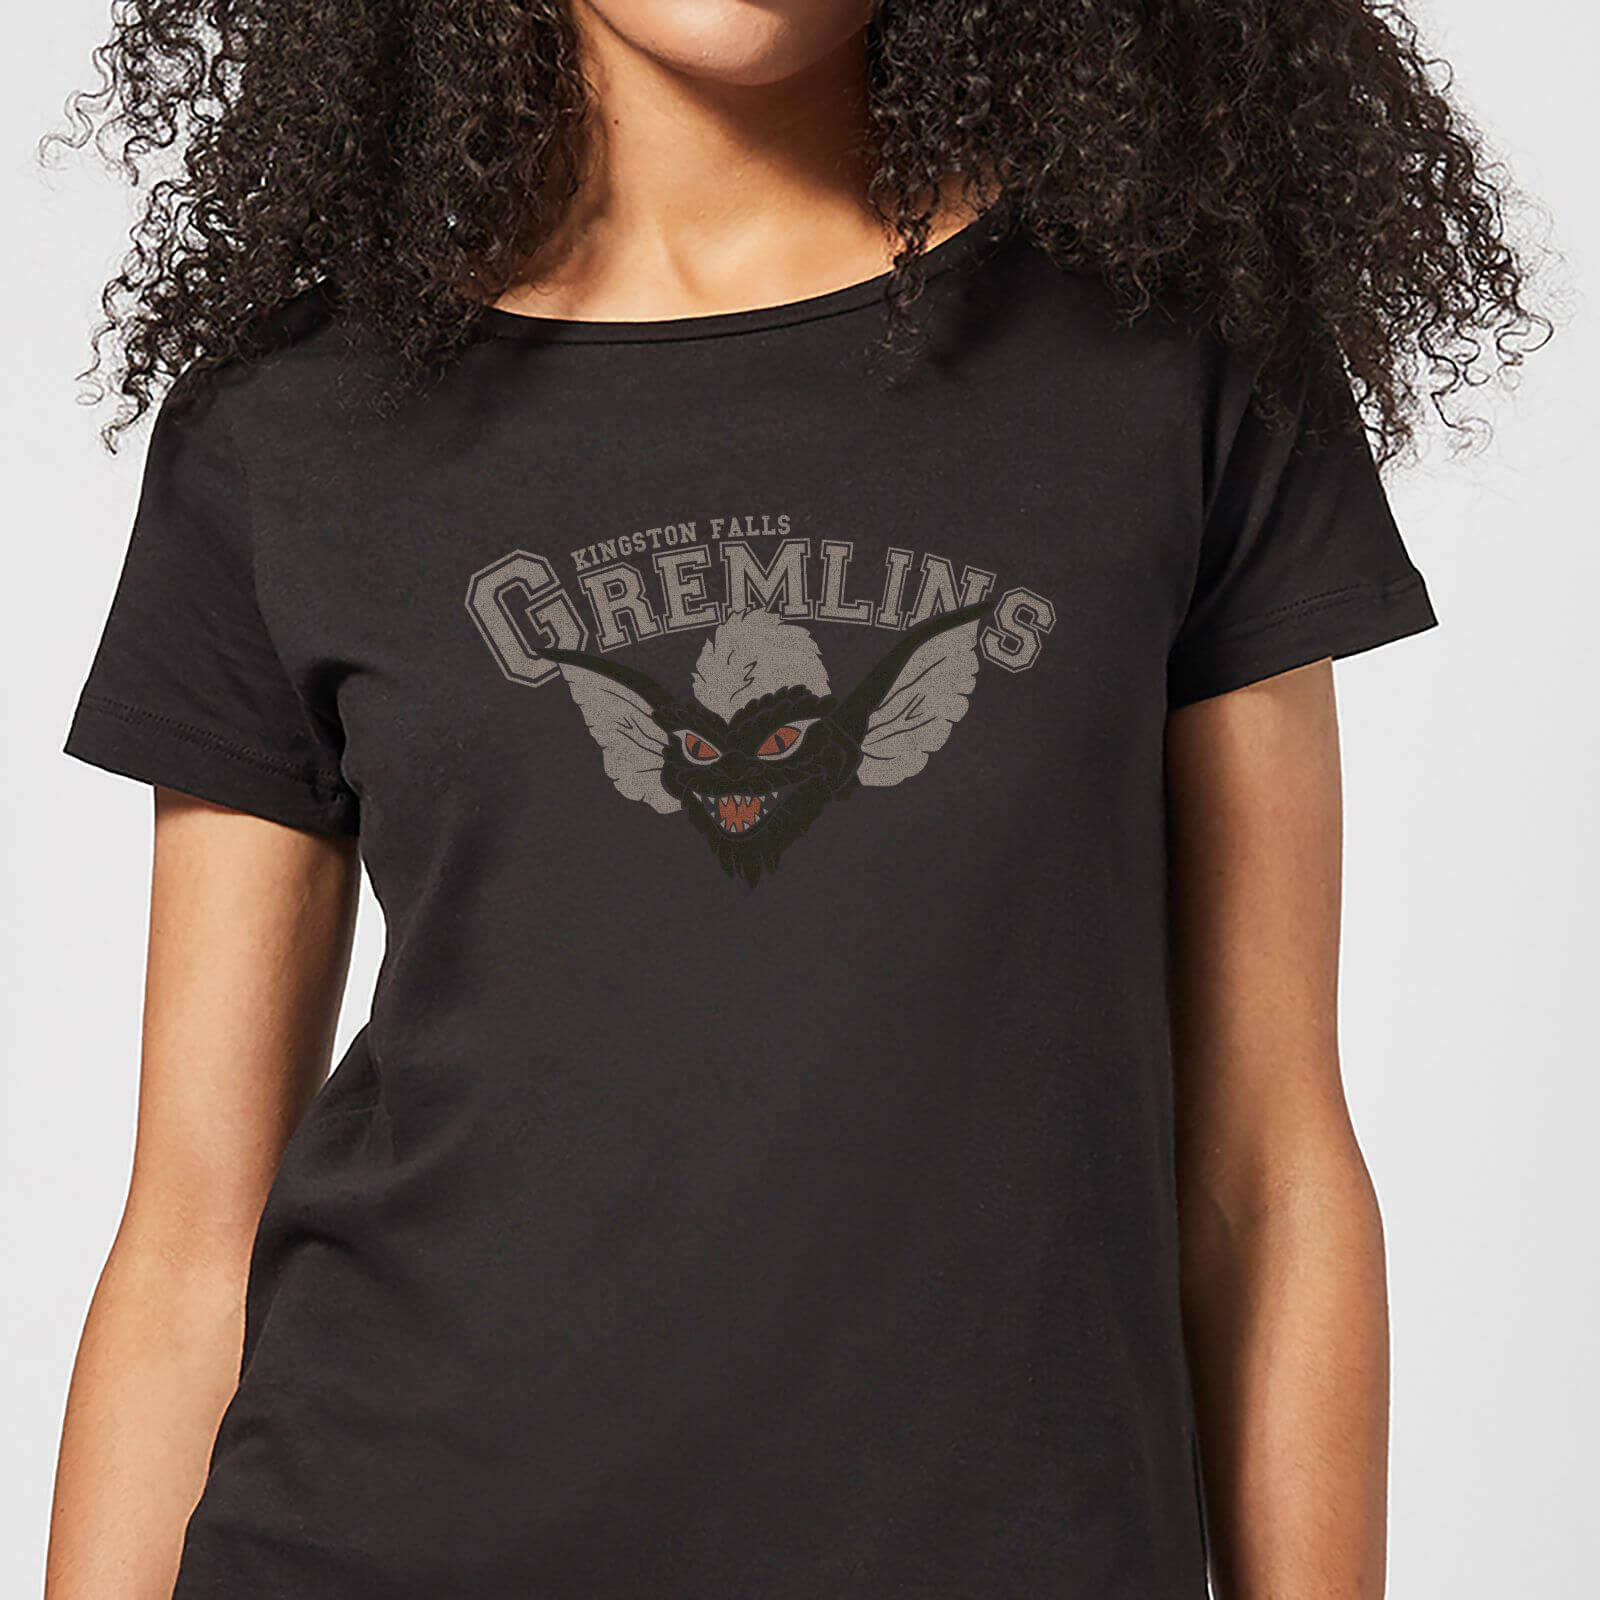 Gremlins Kingston Falls Sport Women's T-Shirt - Black - L - Black